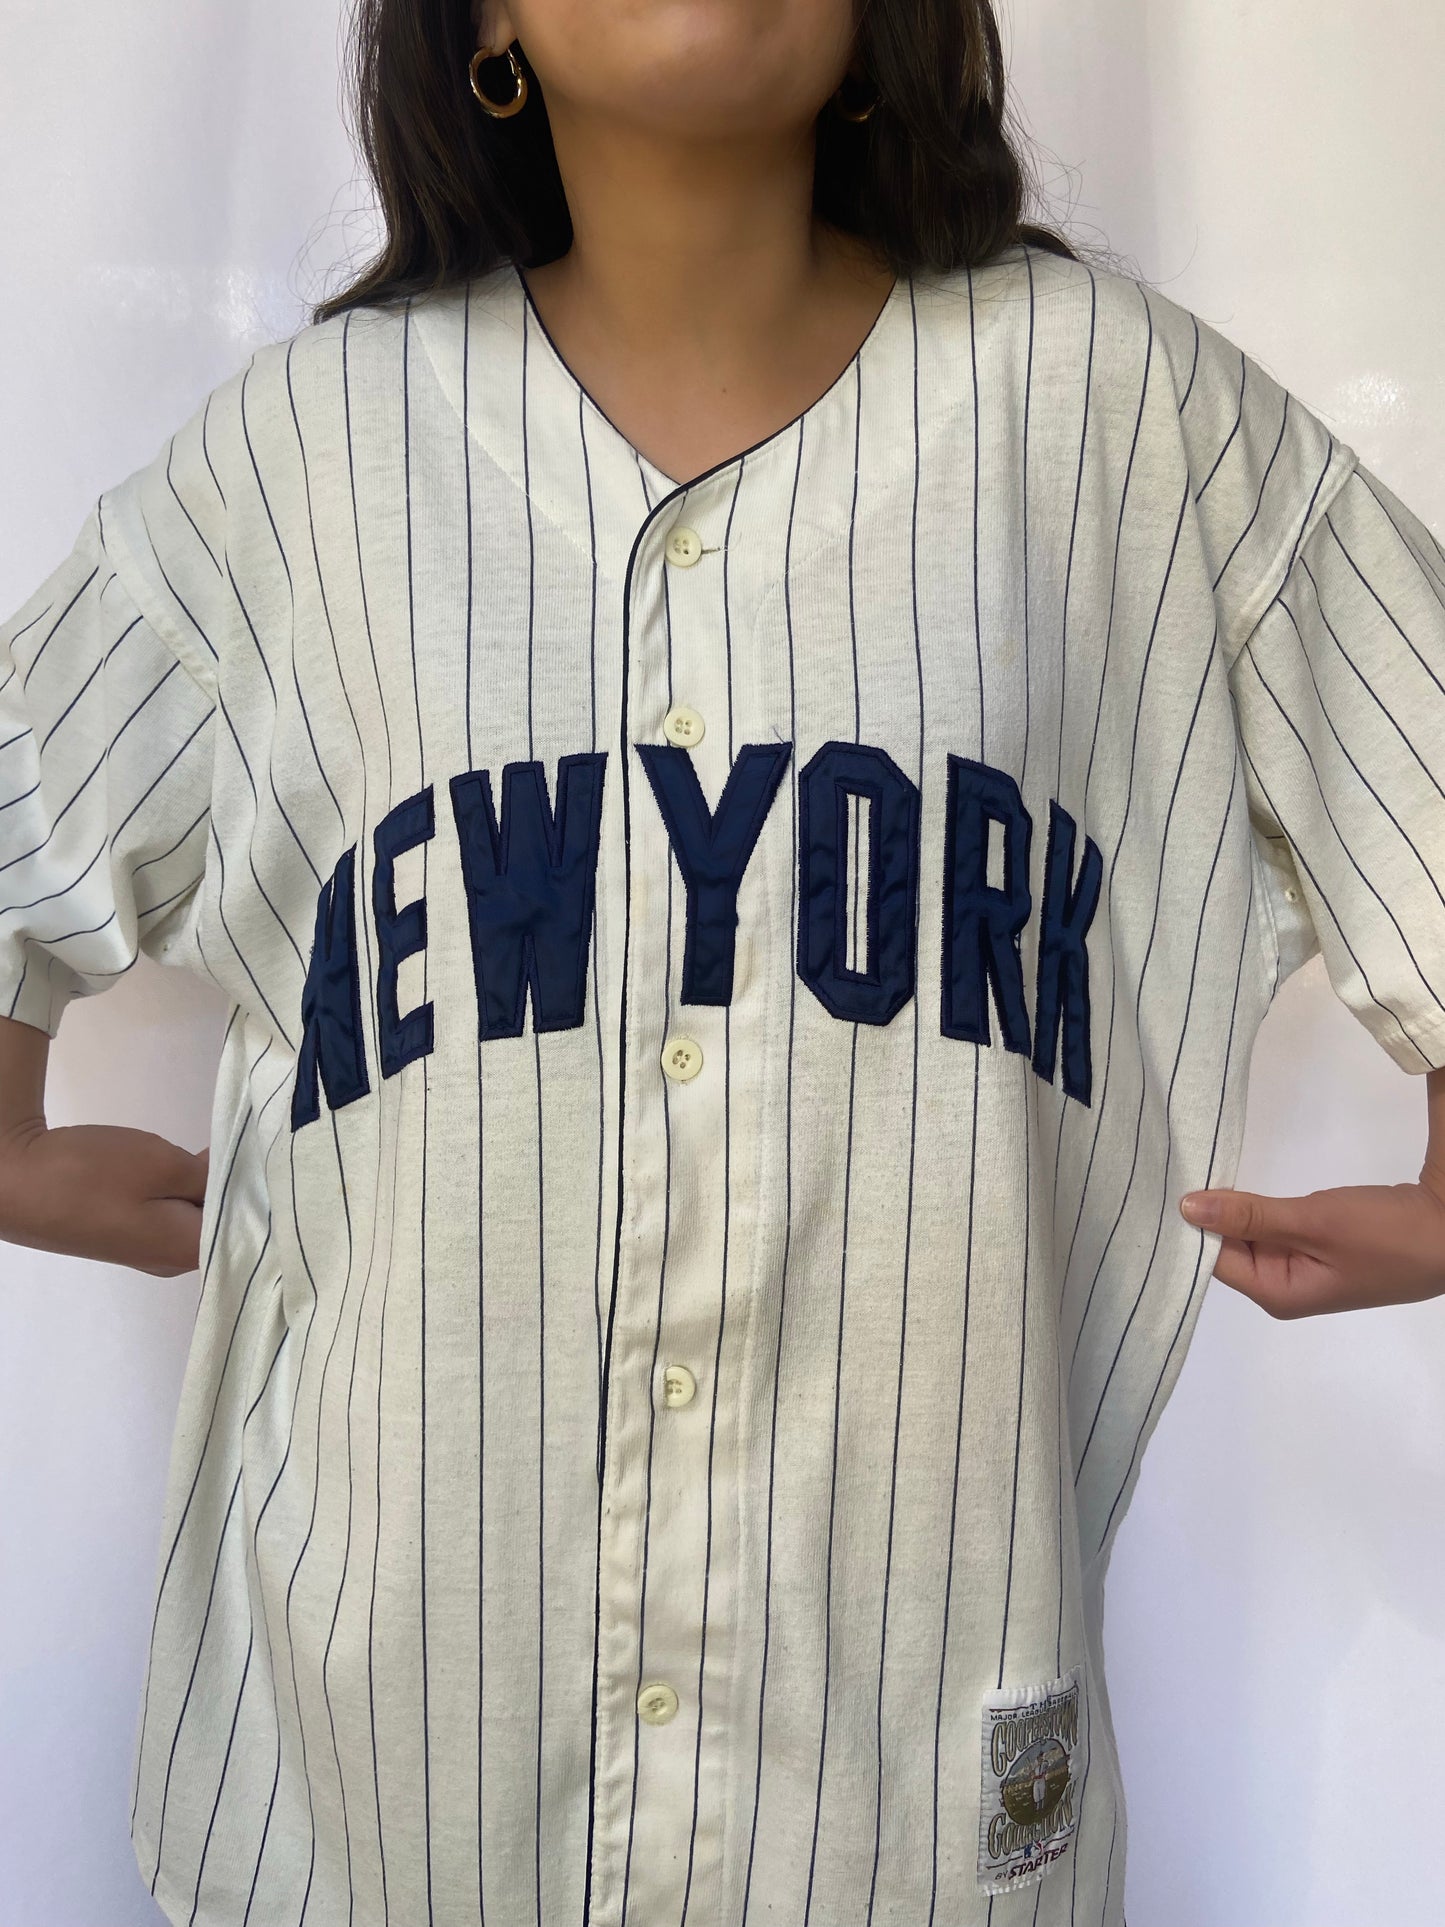 New York Yankees Baseball Jersey - L